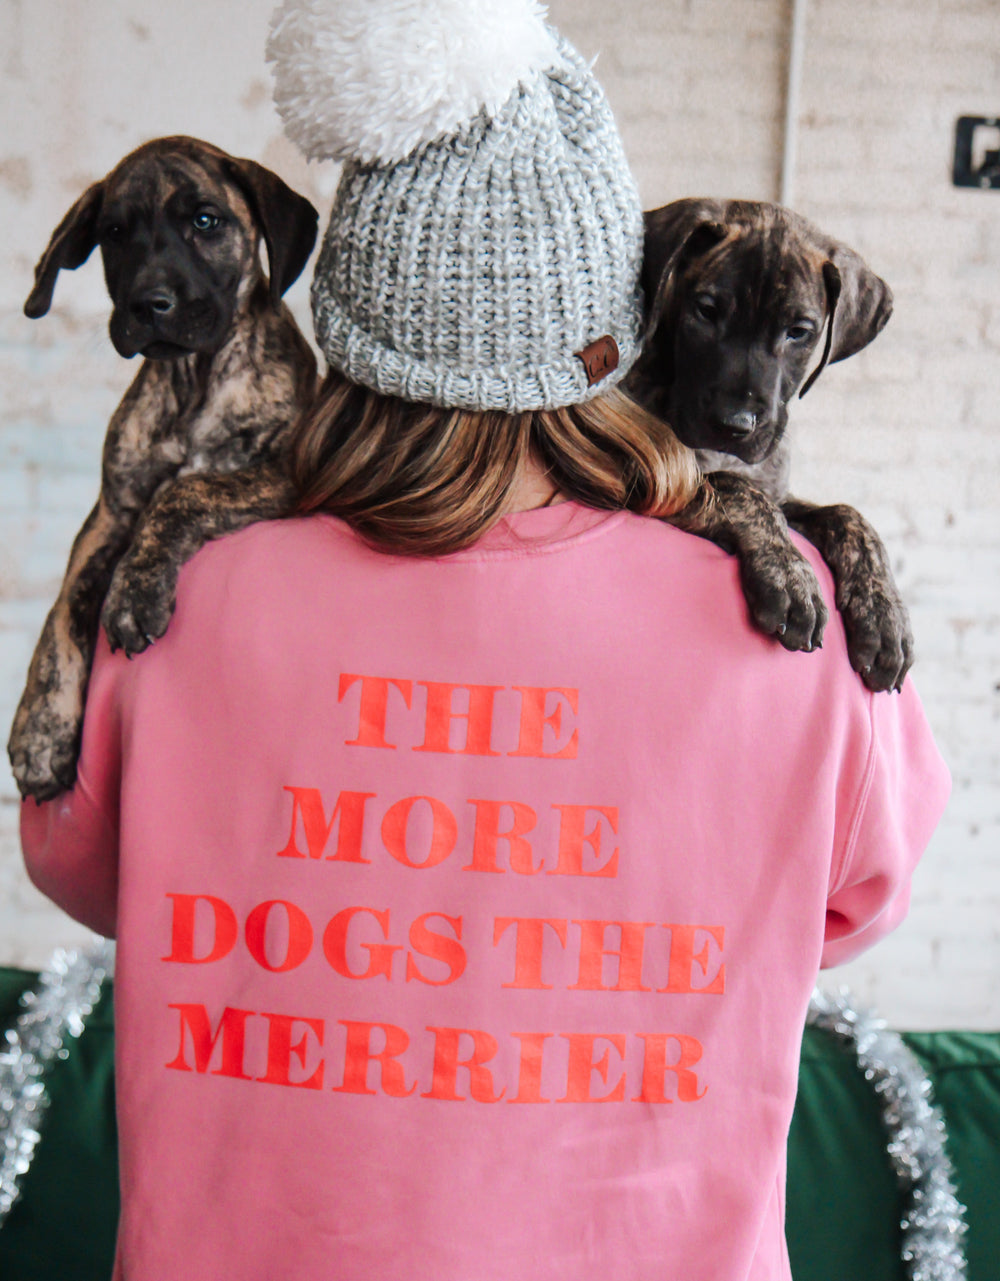 More Dogs The Merrier Sweatshirt - Treat Dreams